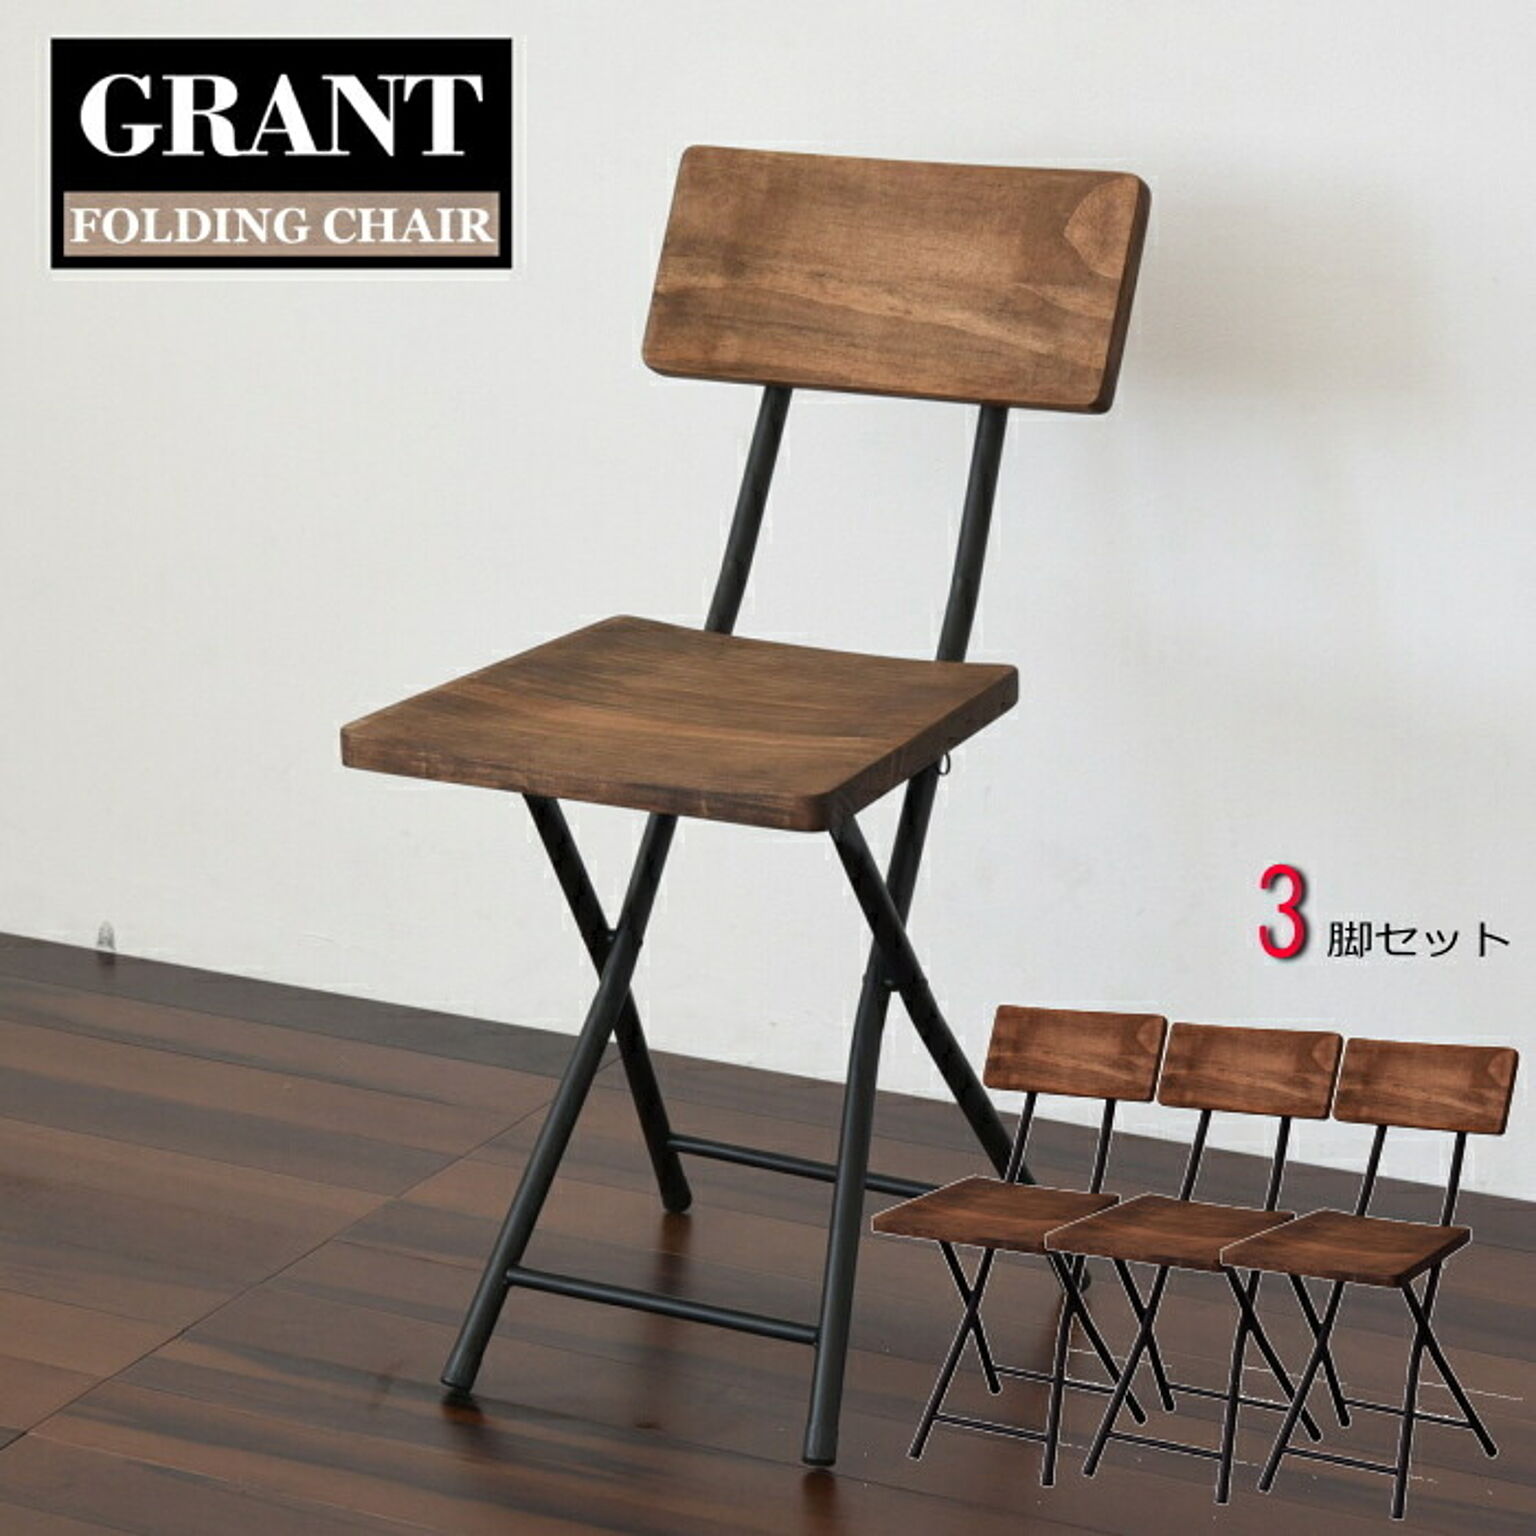 GRANT(グラント) 折りたたみチェアー 【3脚セット】折りたたみ椅子 折りたたみチェア 軽量 木製 椅子 いす イス 持ち運び アイアン アンティーク アウトドア フォールディングチェア 背もたれ